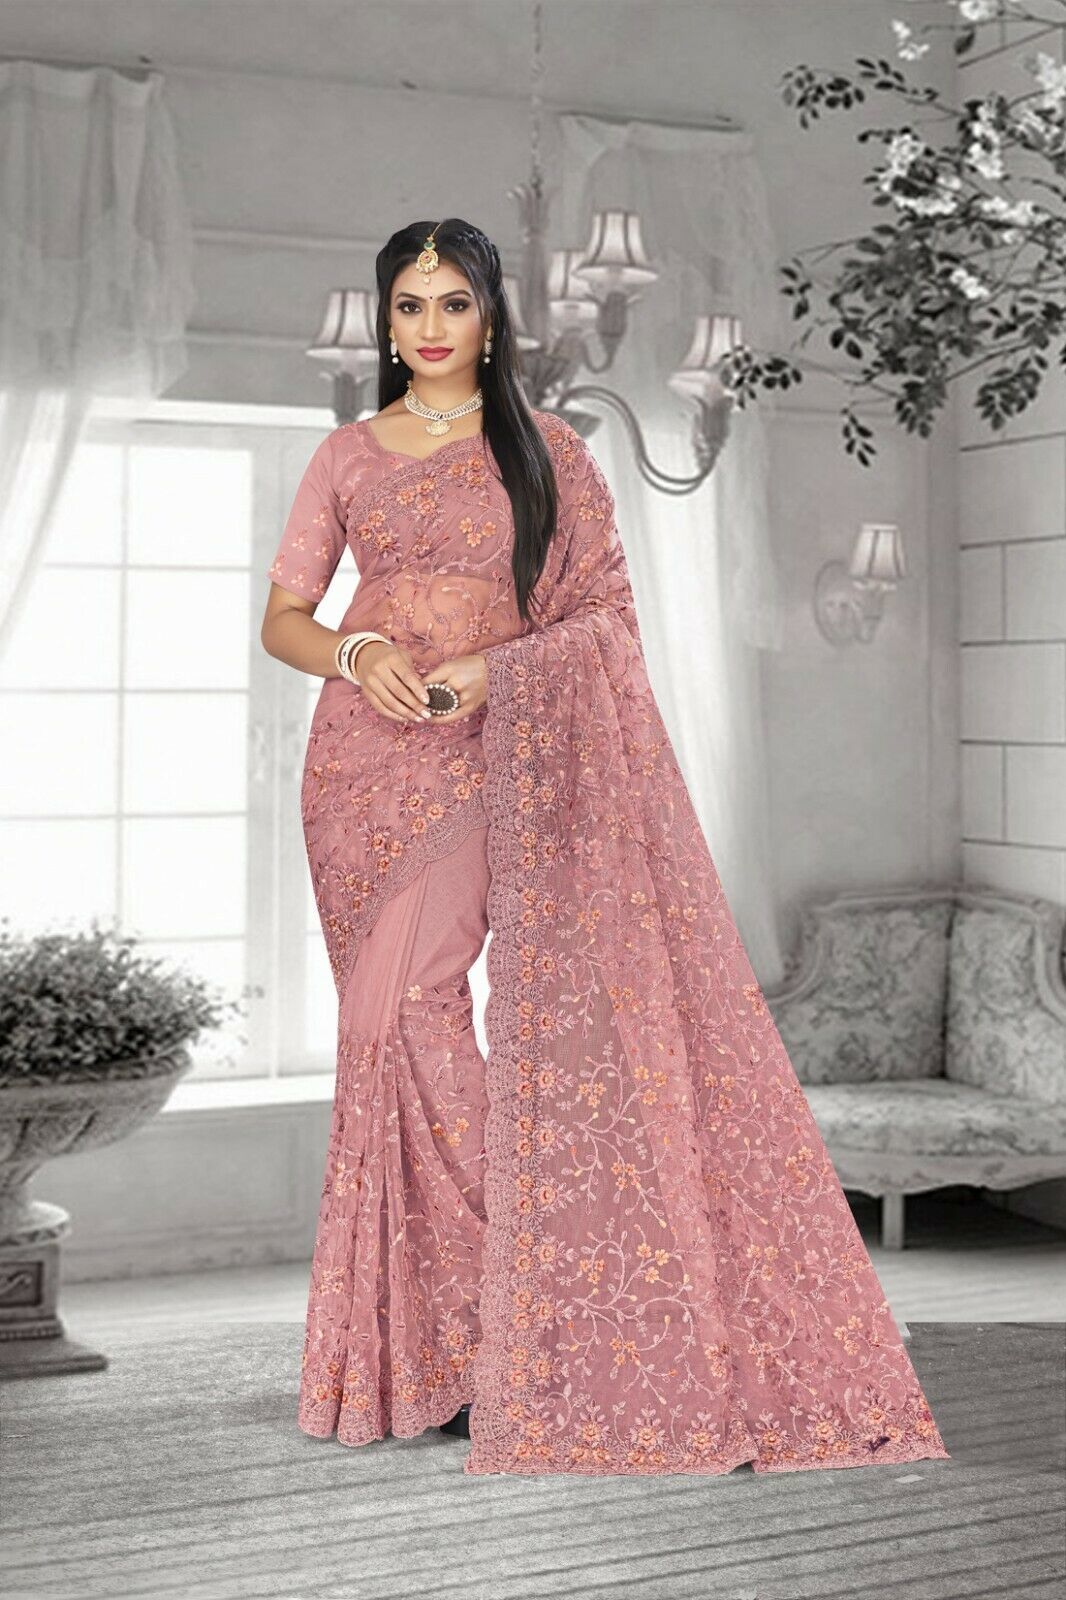 Kad Creations - Designer dusty pink resham coding embroidery work sari net wedding wear saree